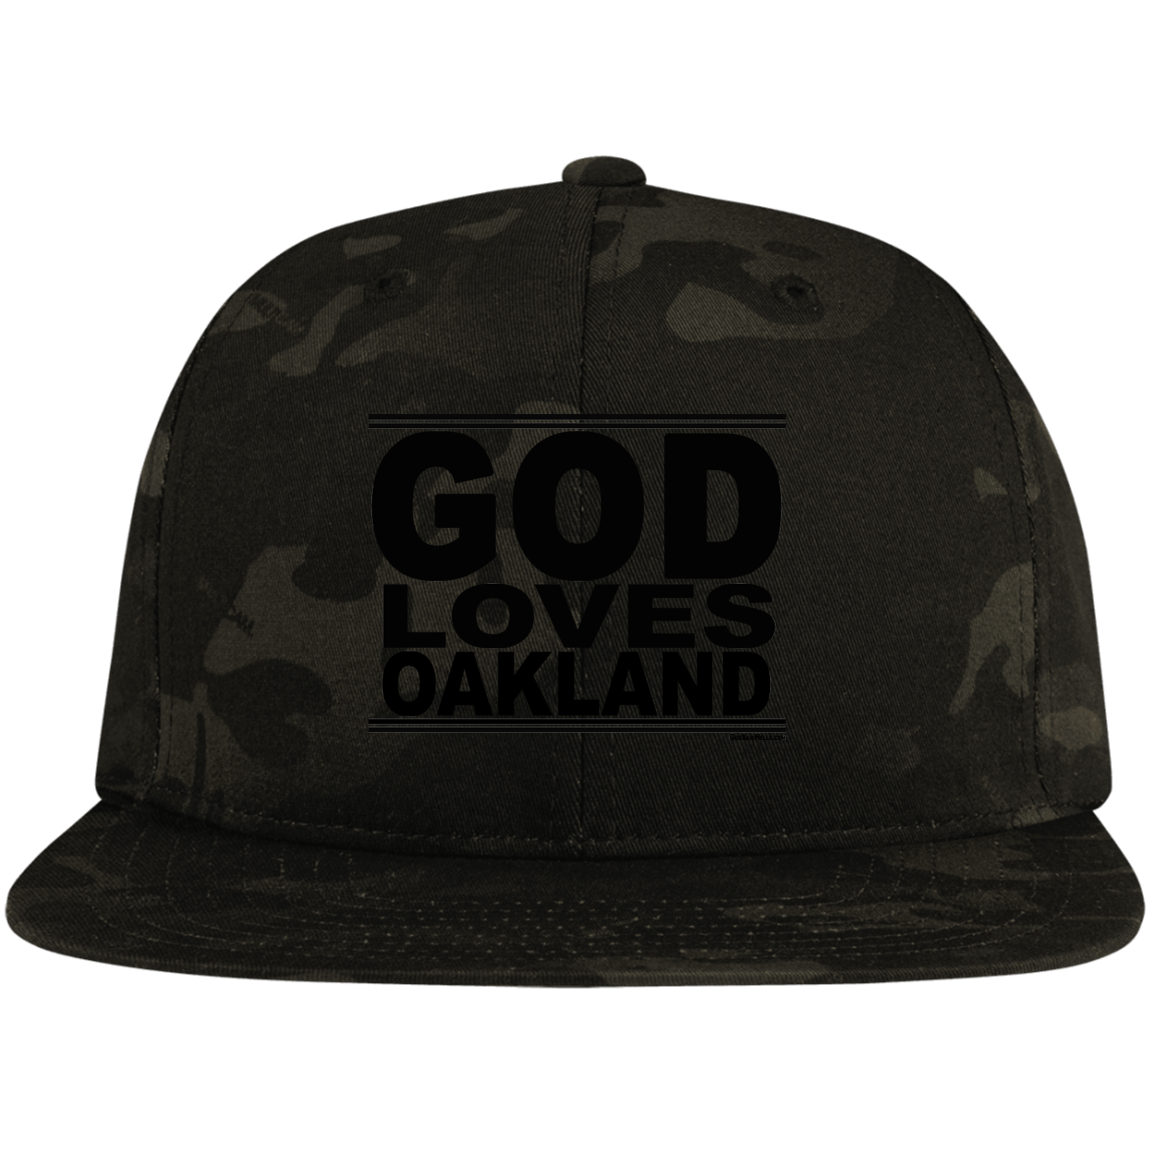 #GodLovesOakland - Snapback Hat